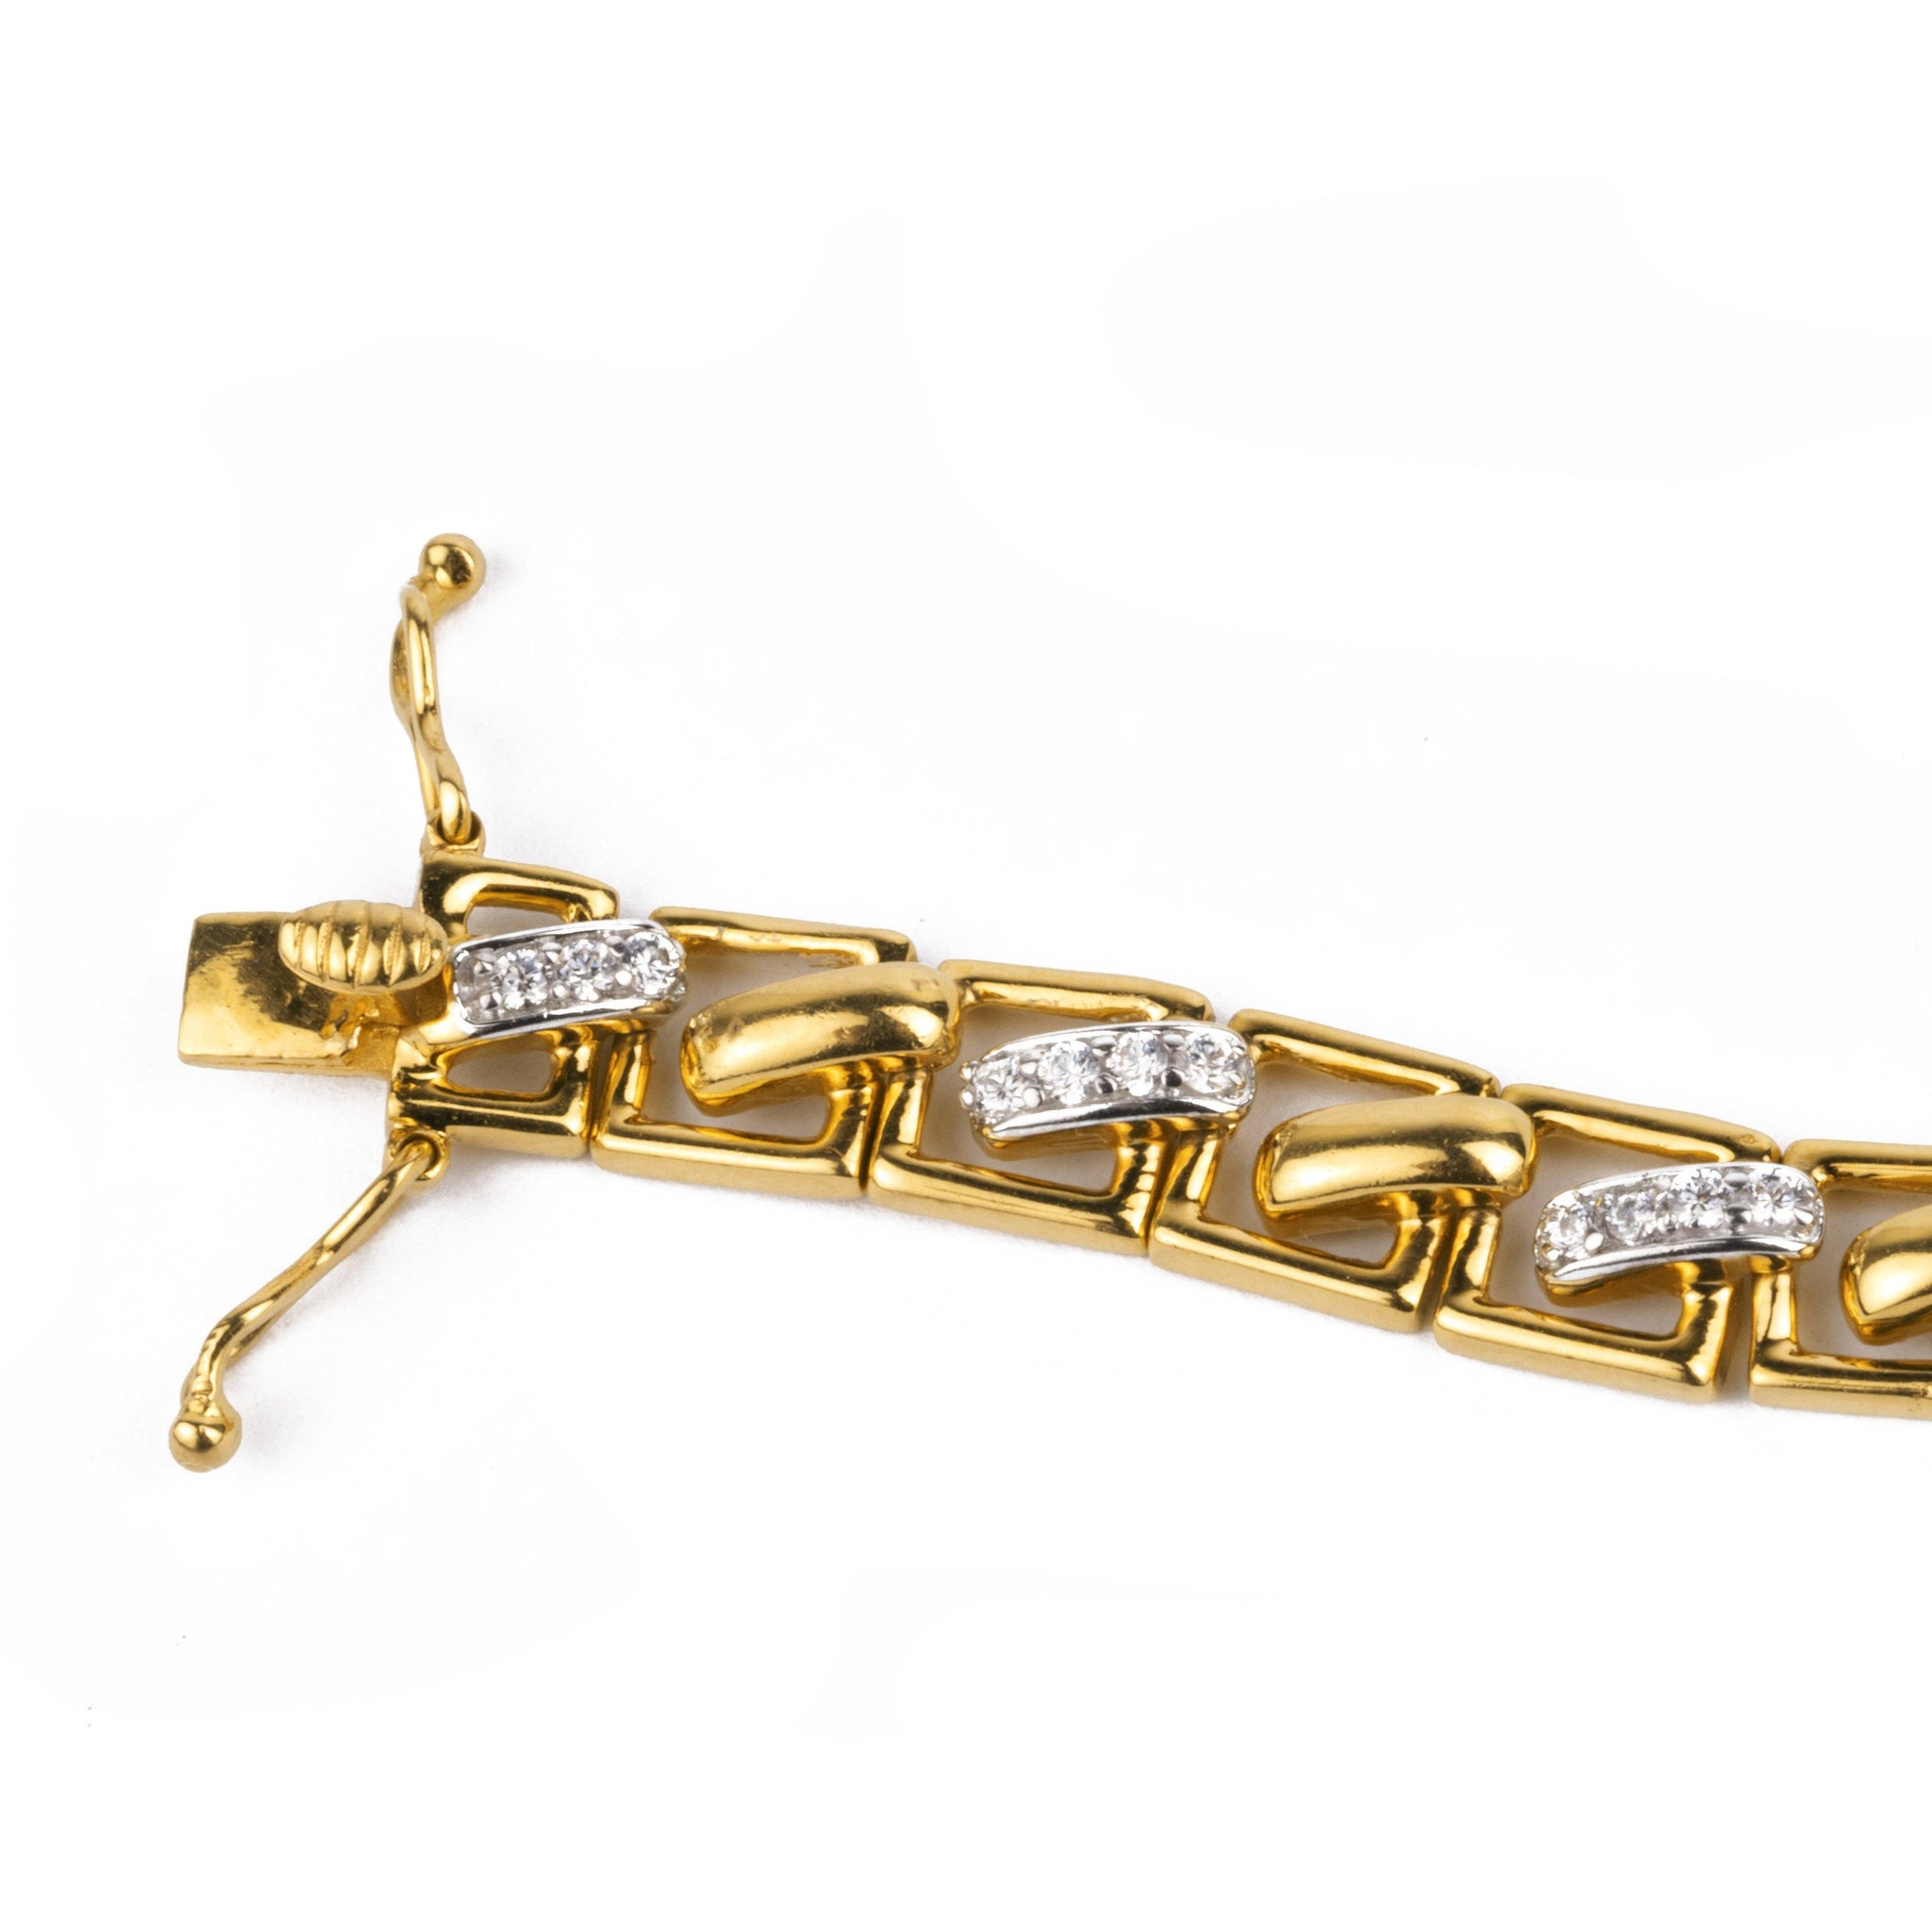 22ct Gold Bracelet with Cubic Zirconia Stones (20.52g) LBR-3983